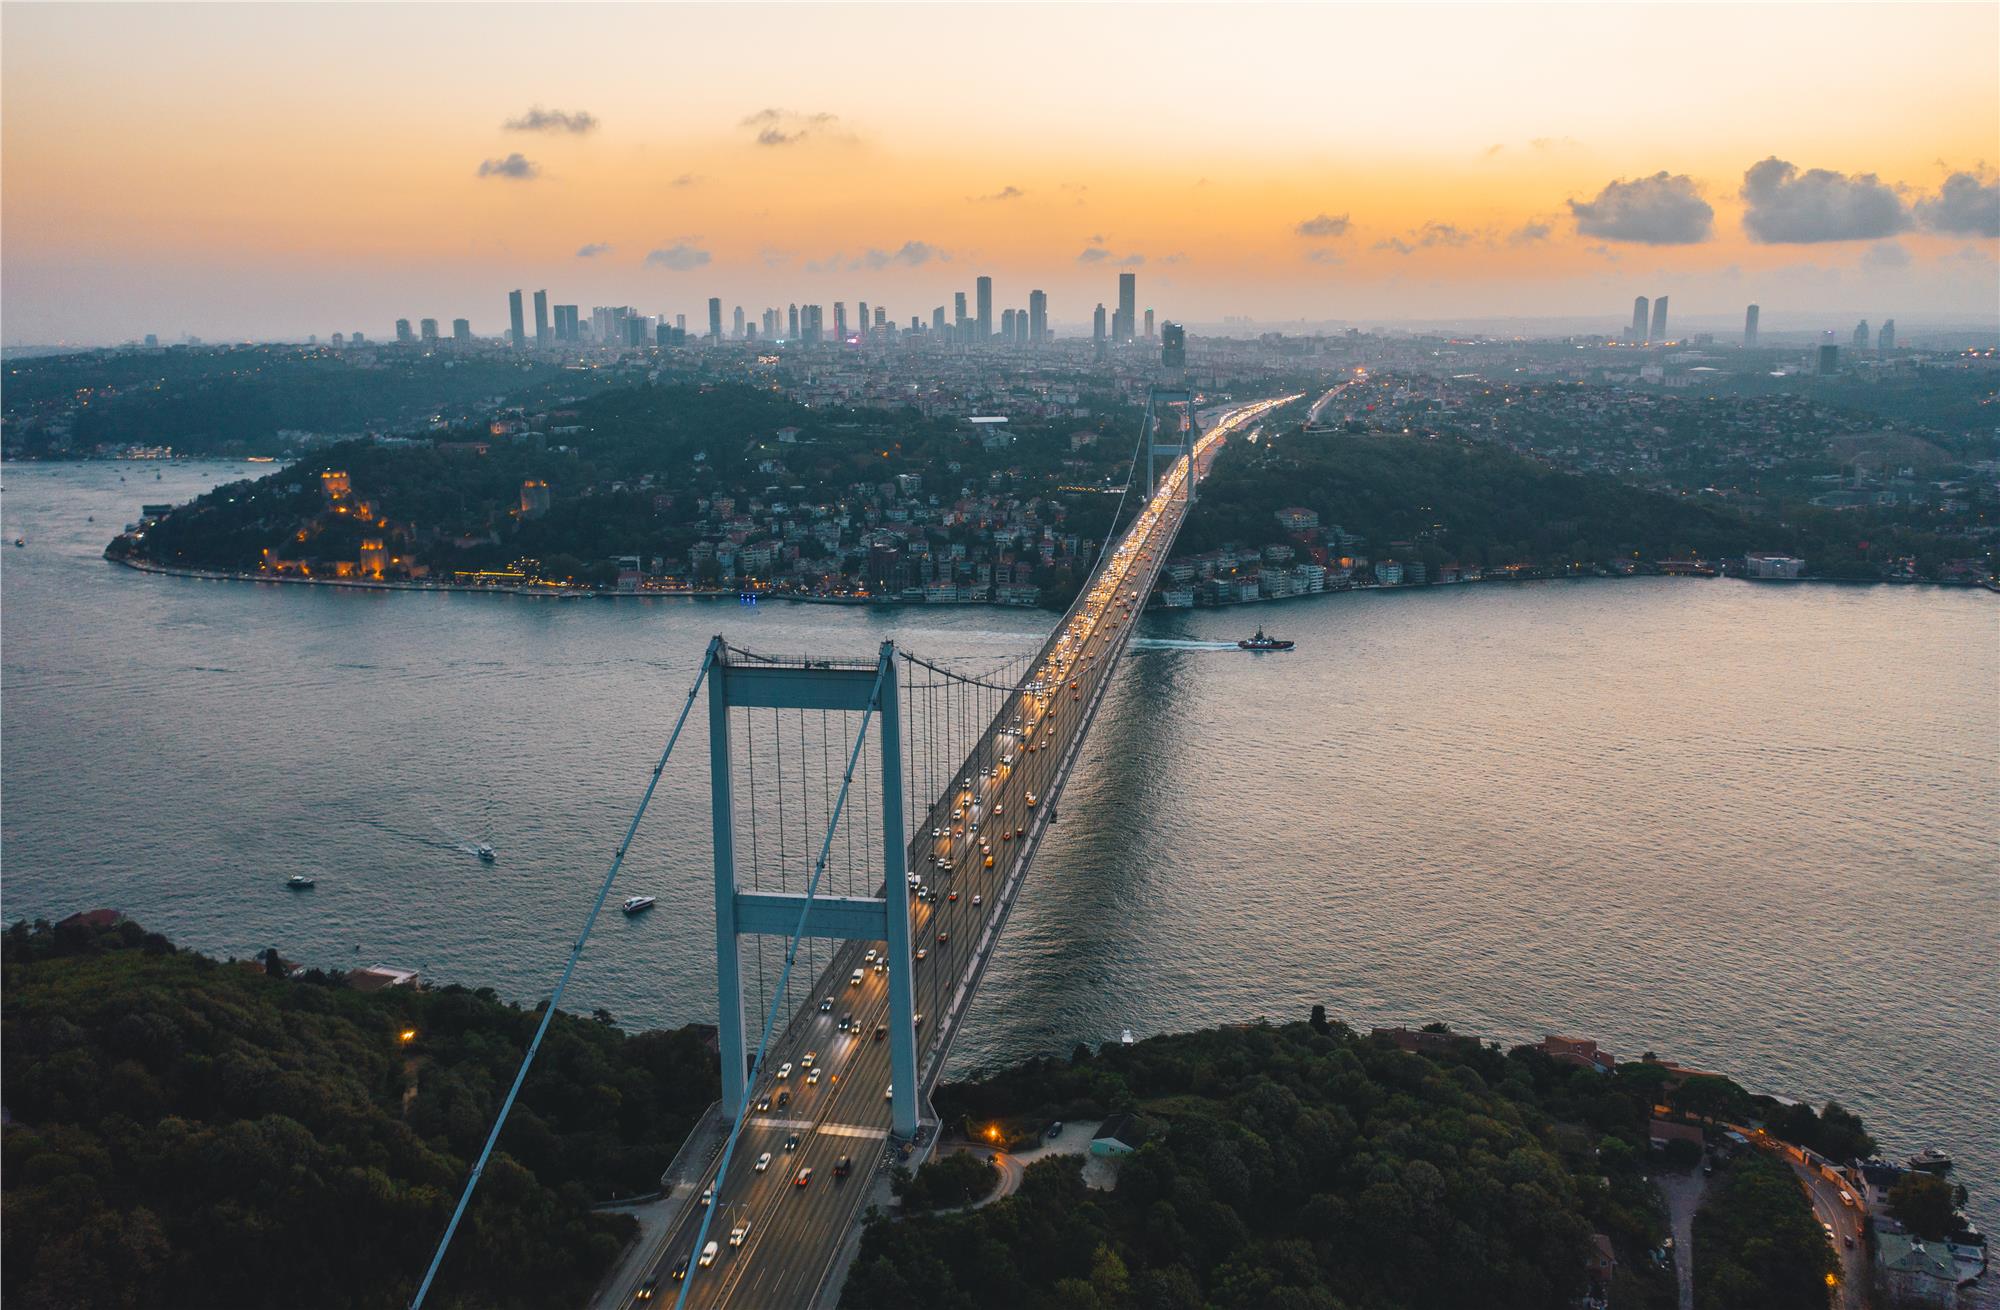 İstanbul Photo Tours